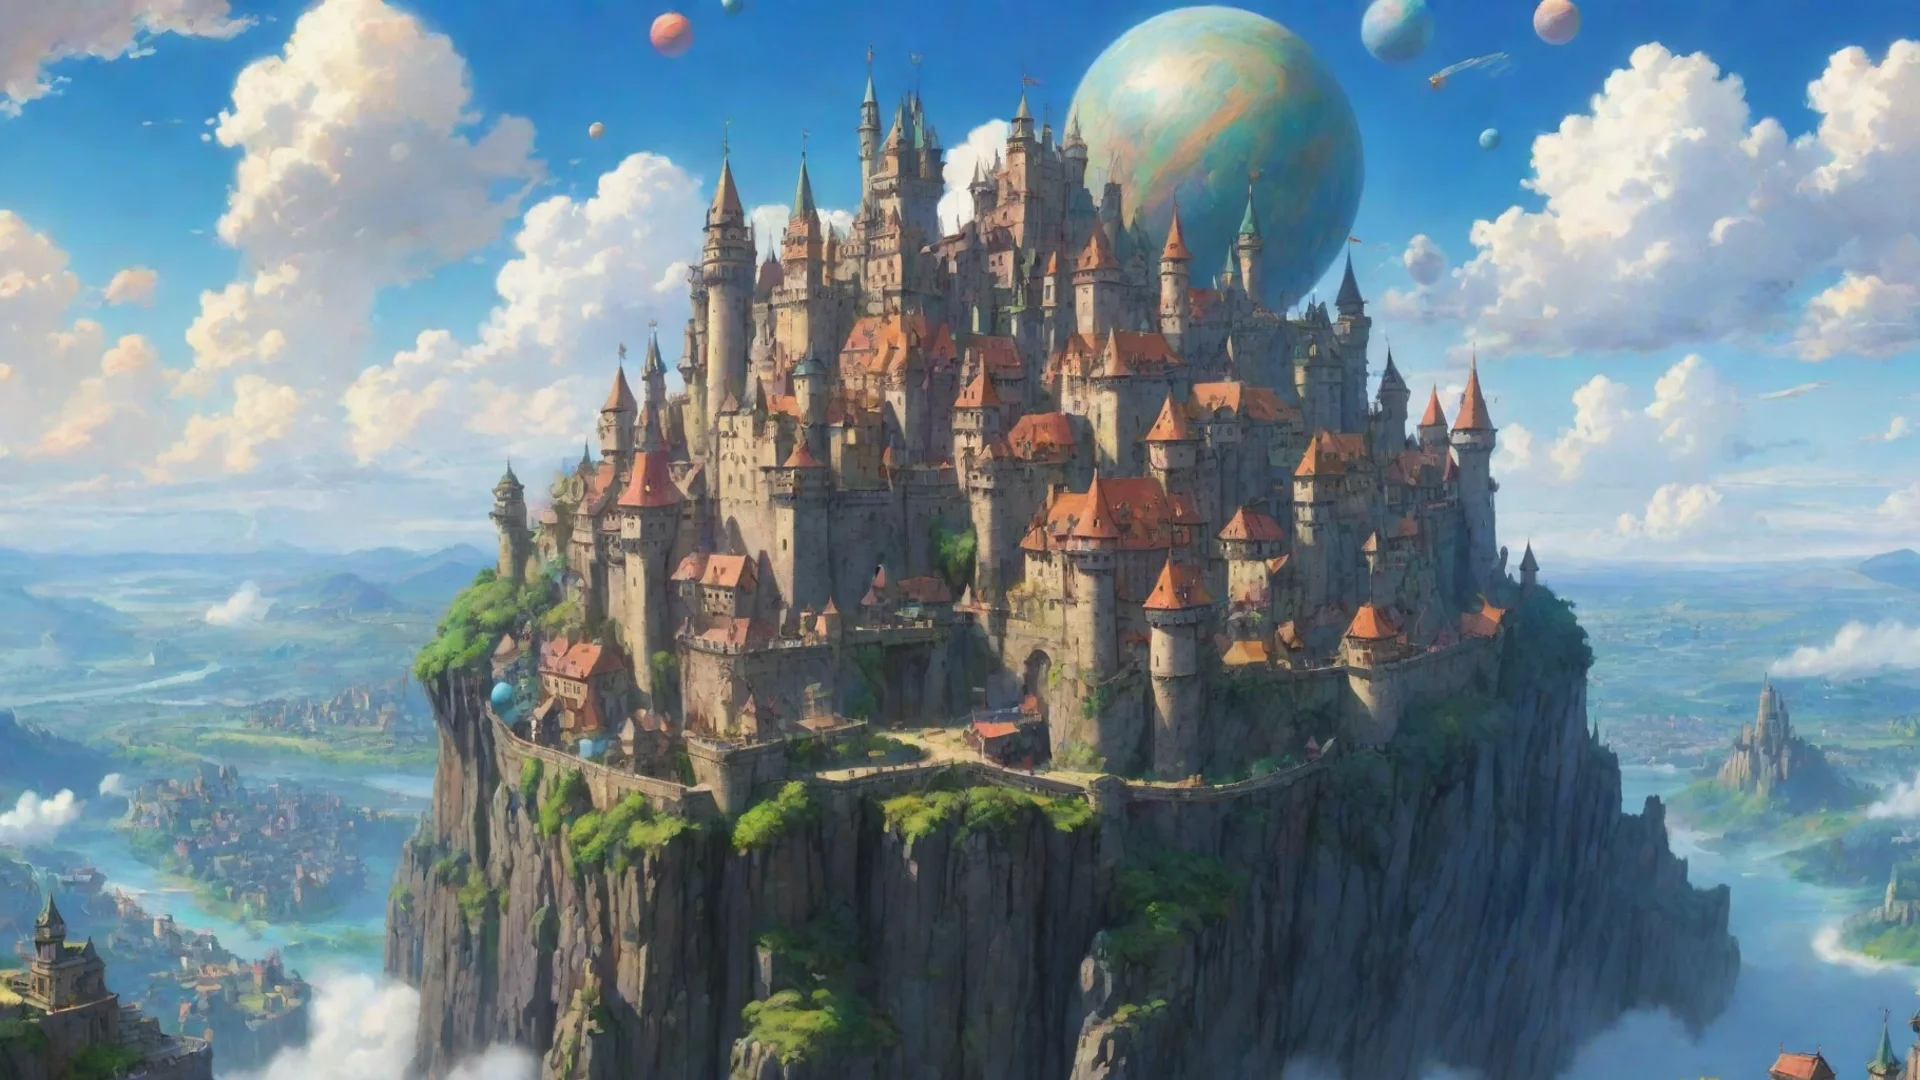 aifantasy art ghibli miyazaki hd best quality aesthetic flying castle colorful planets city fortress  wide